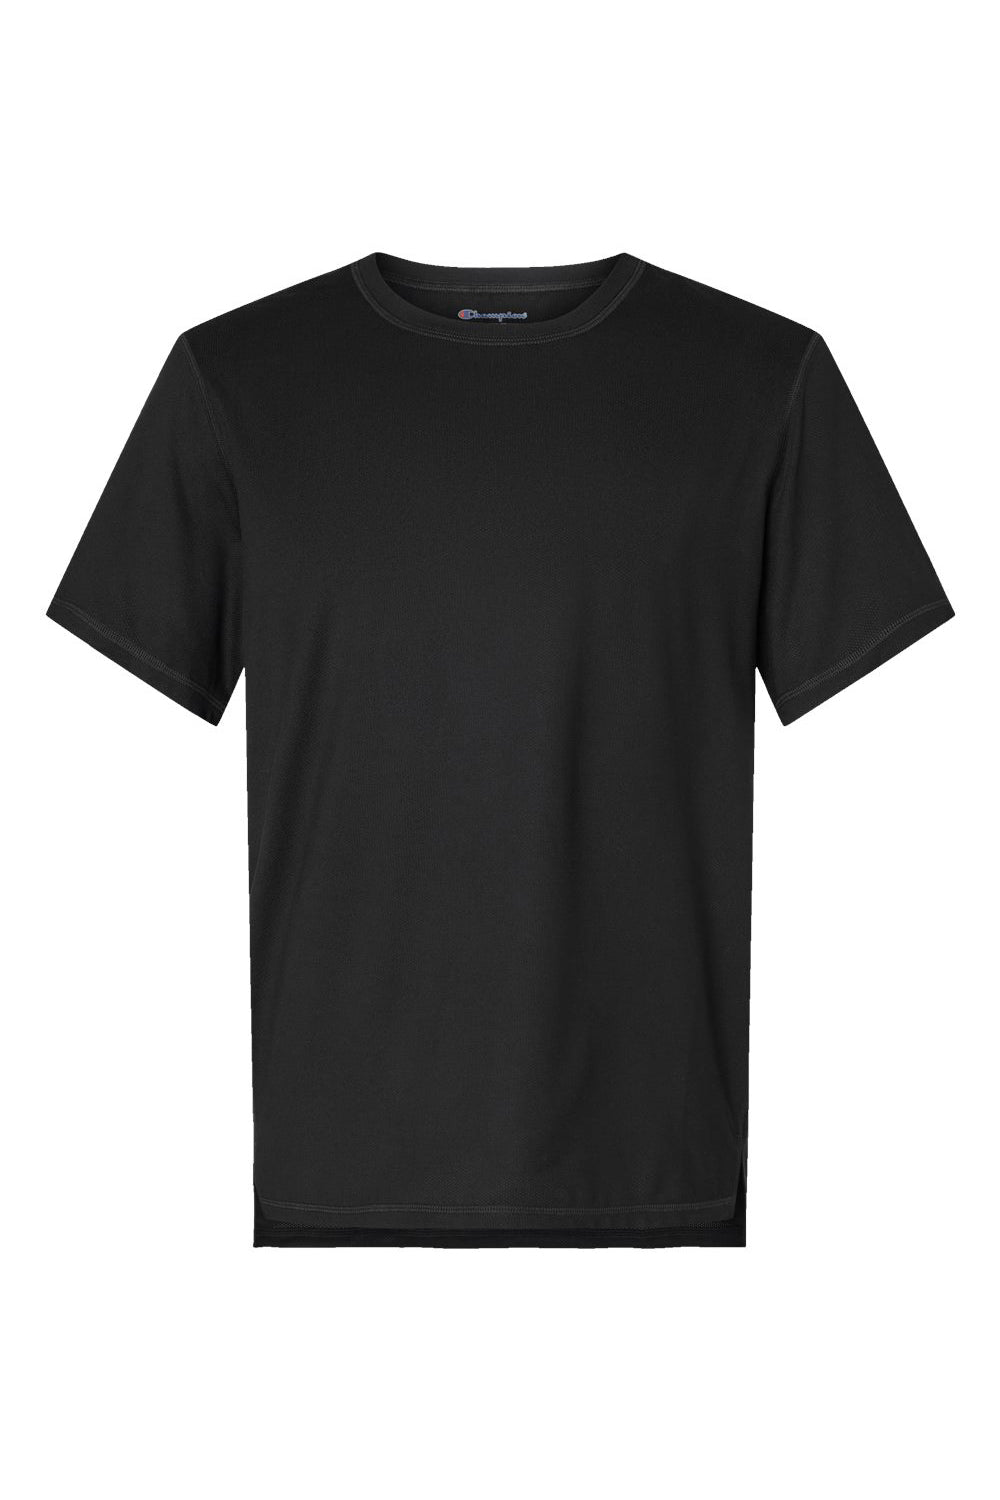 Champion CHP160 Mens Sport Short Sleeve Crewneck T-Shirt Black Flat Front